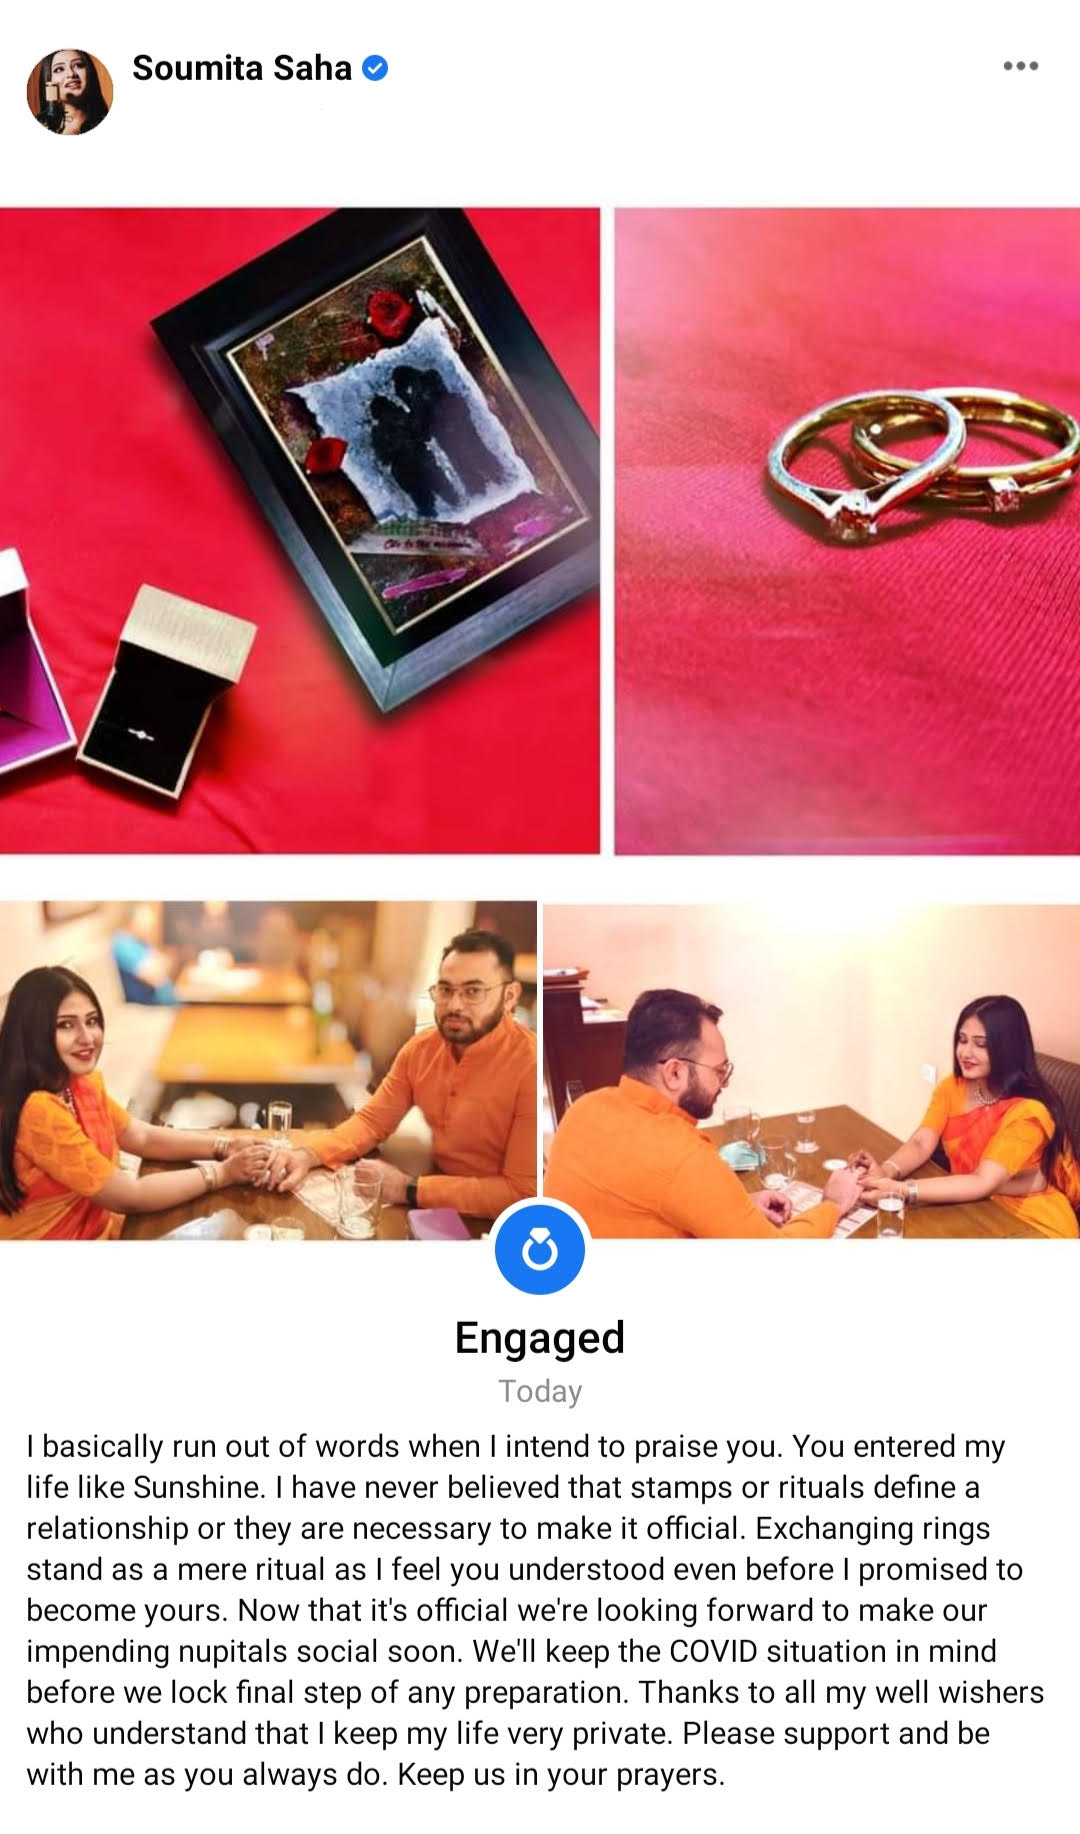 Soumita Saha got engaged to long time beau Agniv Chaterjee